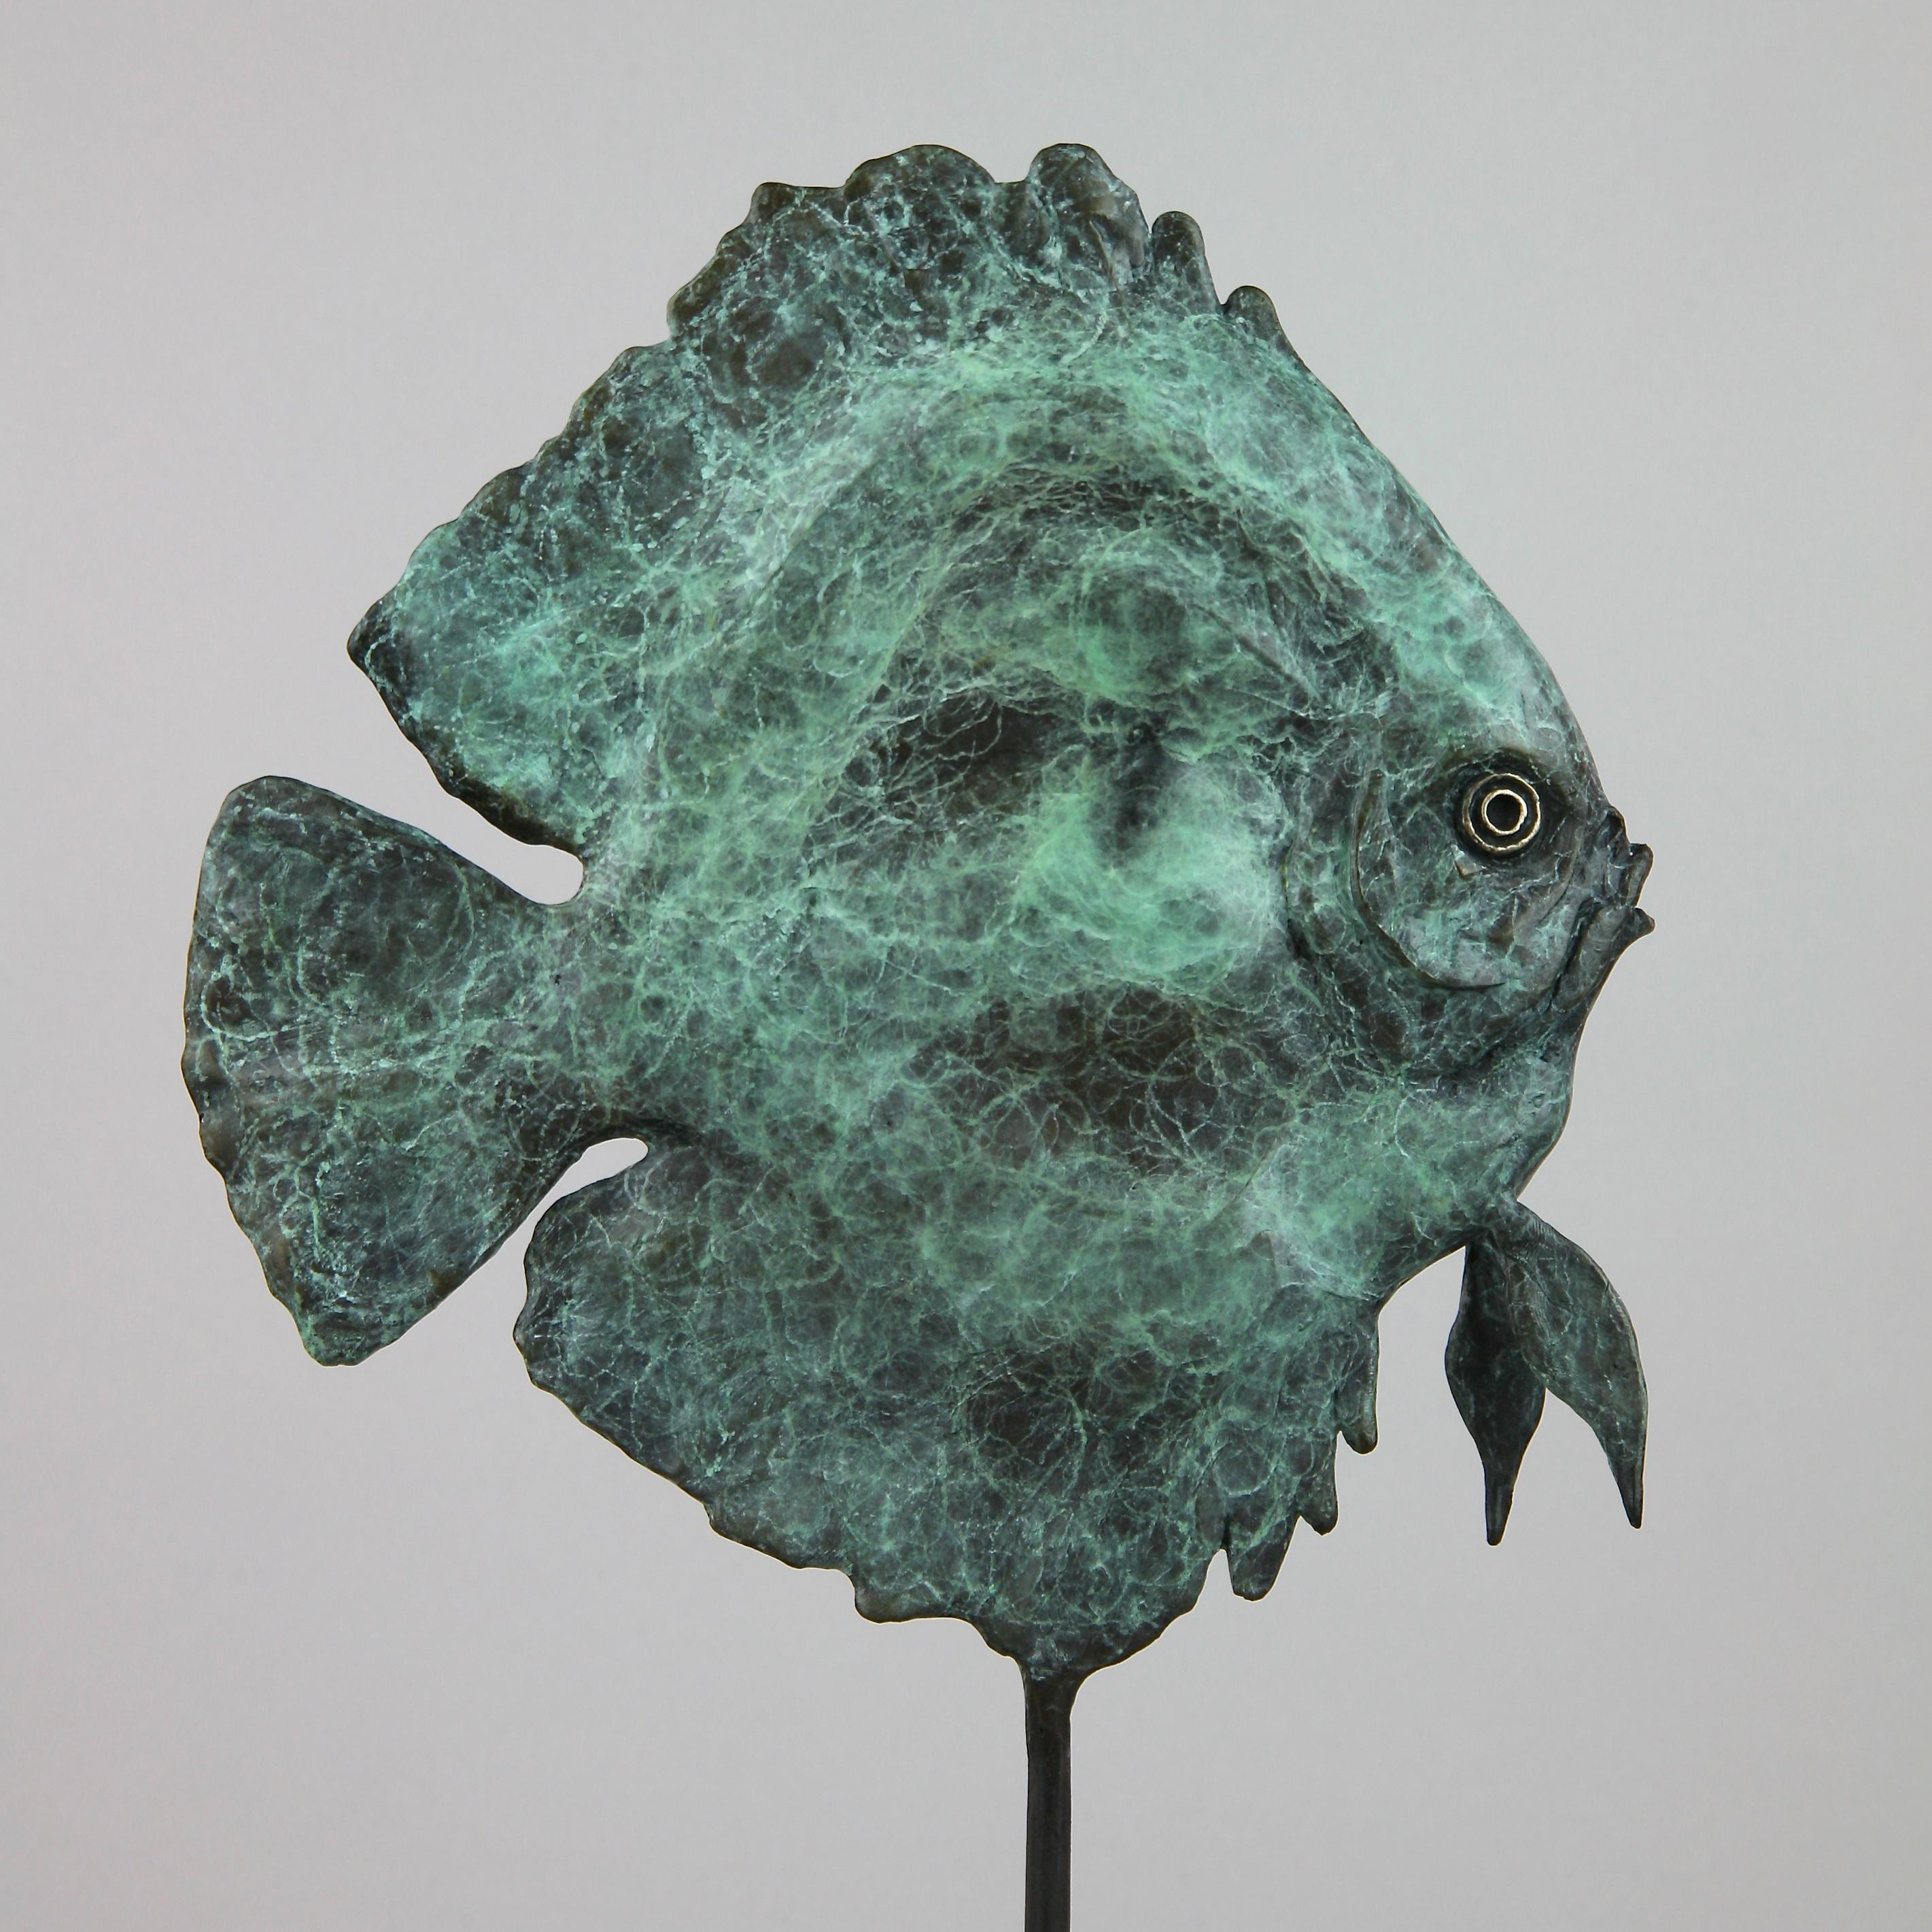 Figurative Sculpture Andrzej Szymczyk - Discus Fish - Wildlife bronze green fish sculpture limited edition modern art